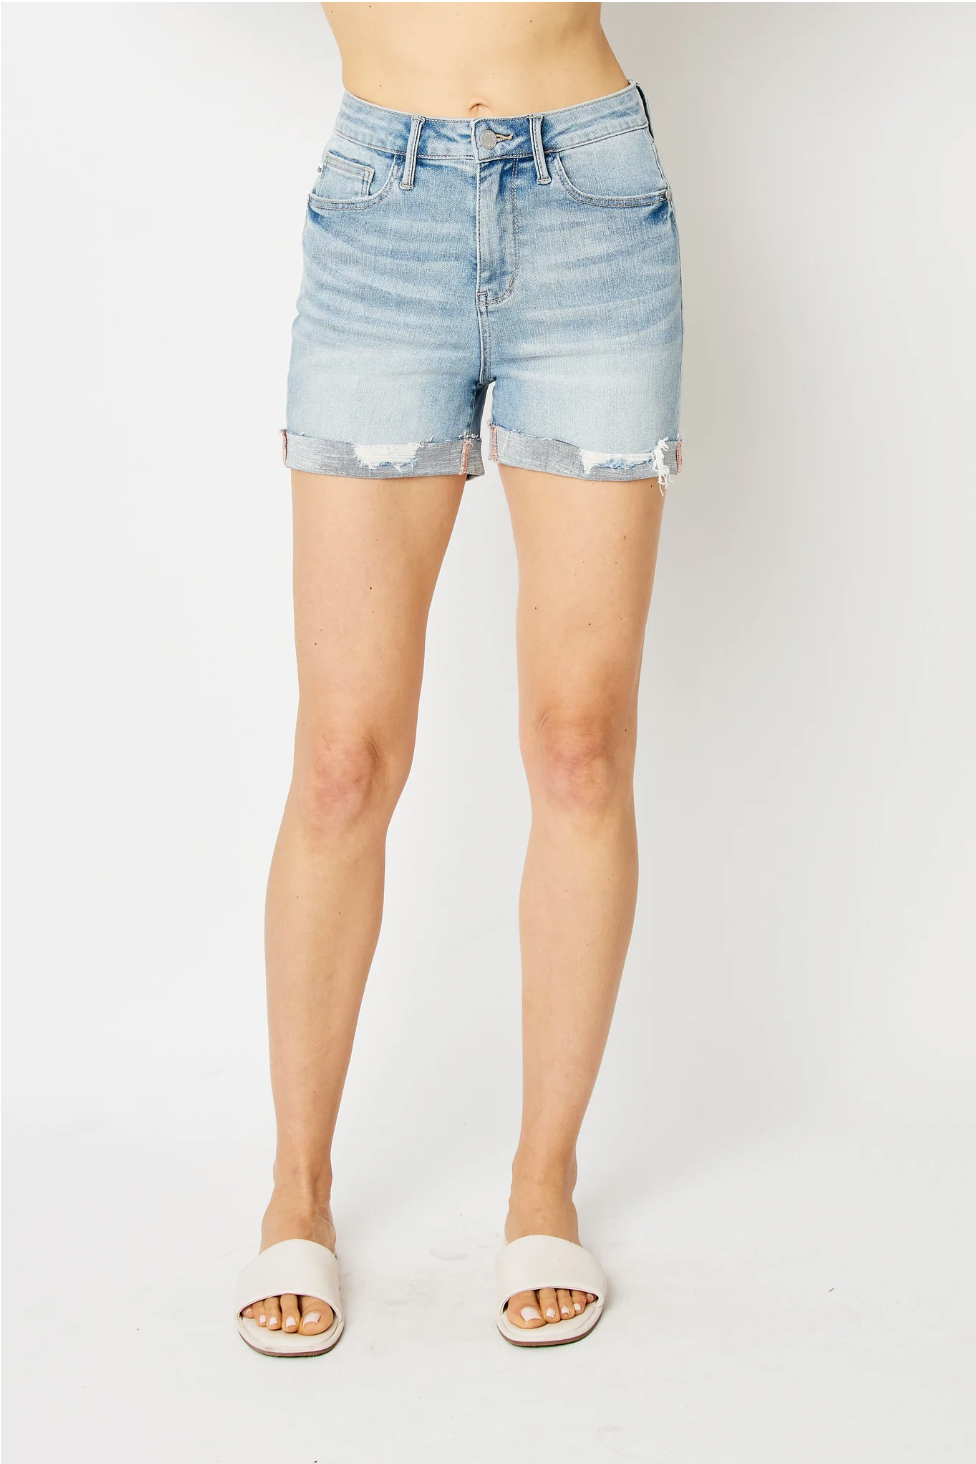 Judy Blue Light Wash Distressed Cuffed Shorts